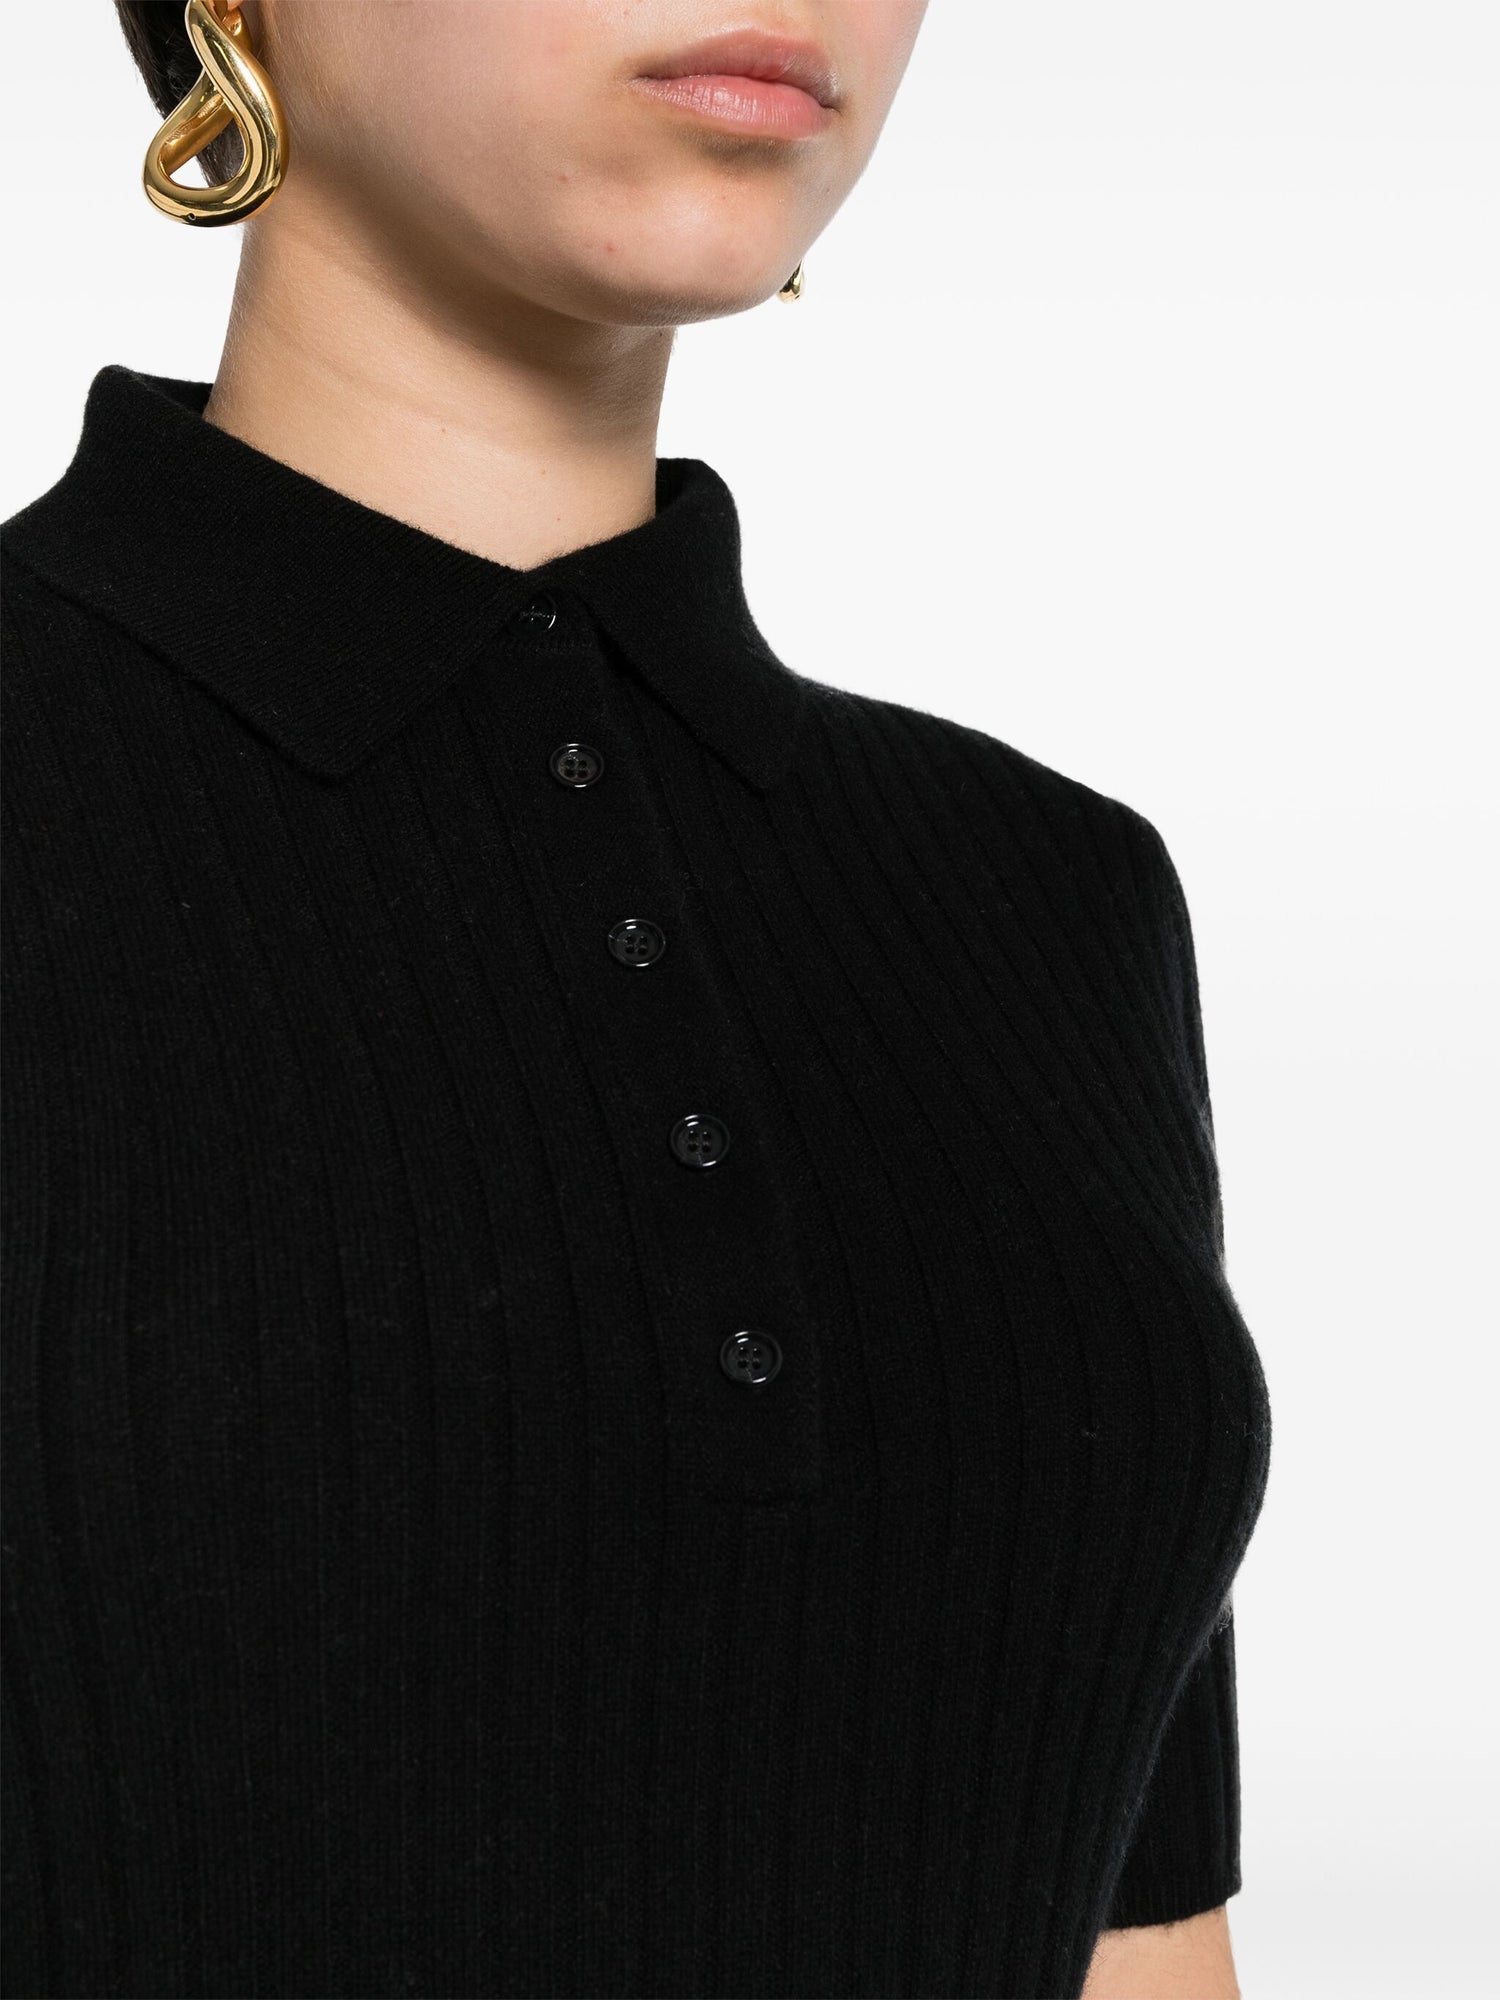 Poloneck cashmere sweater, black